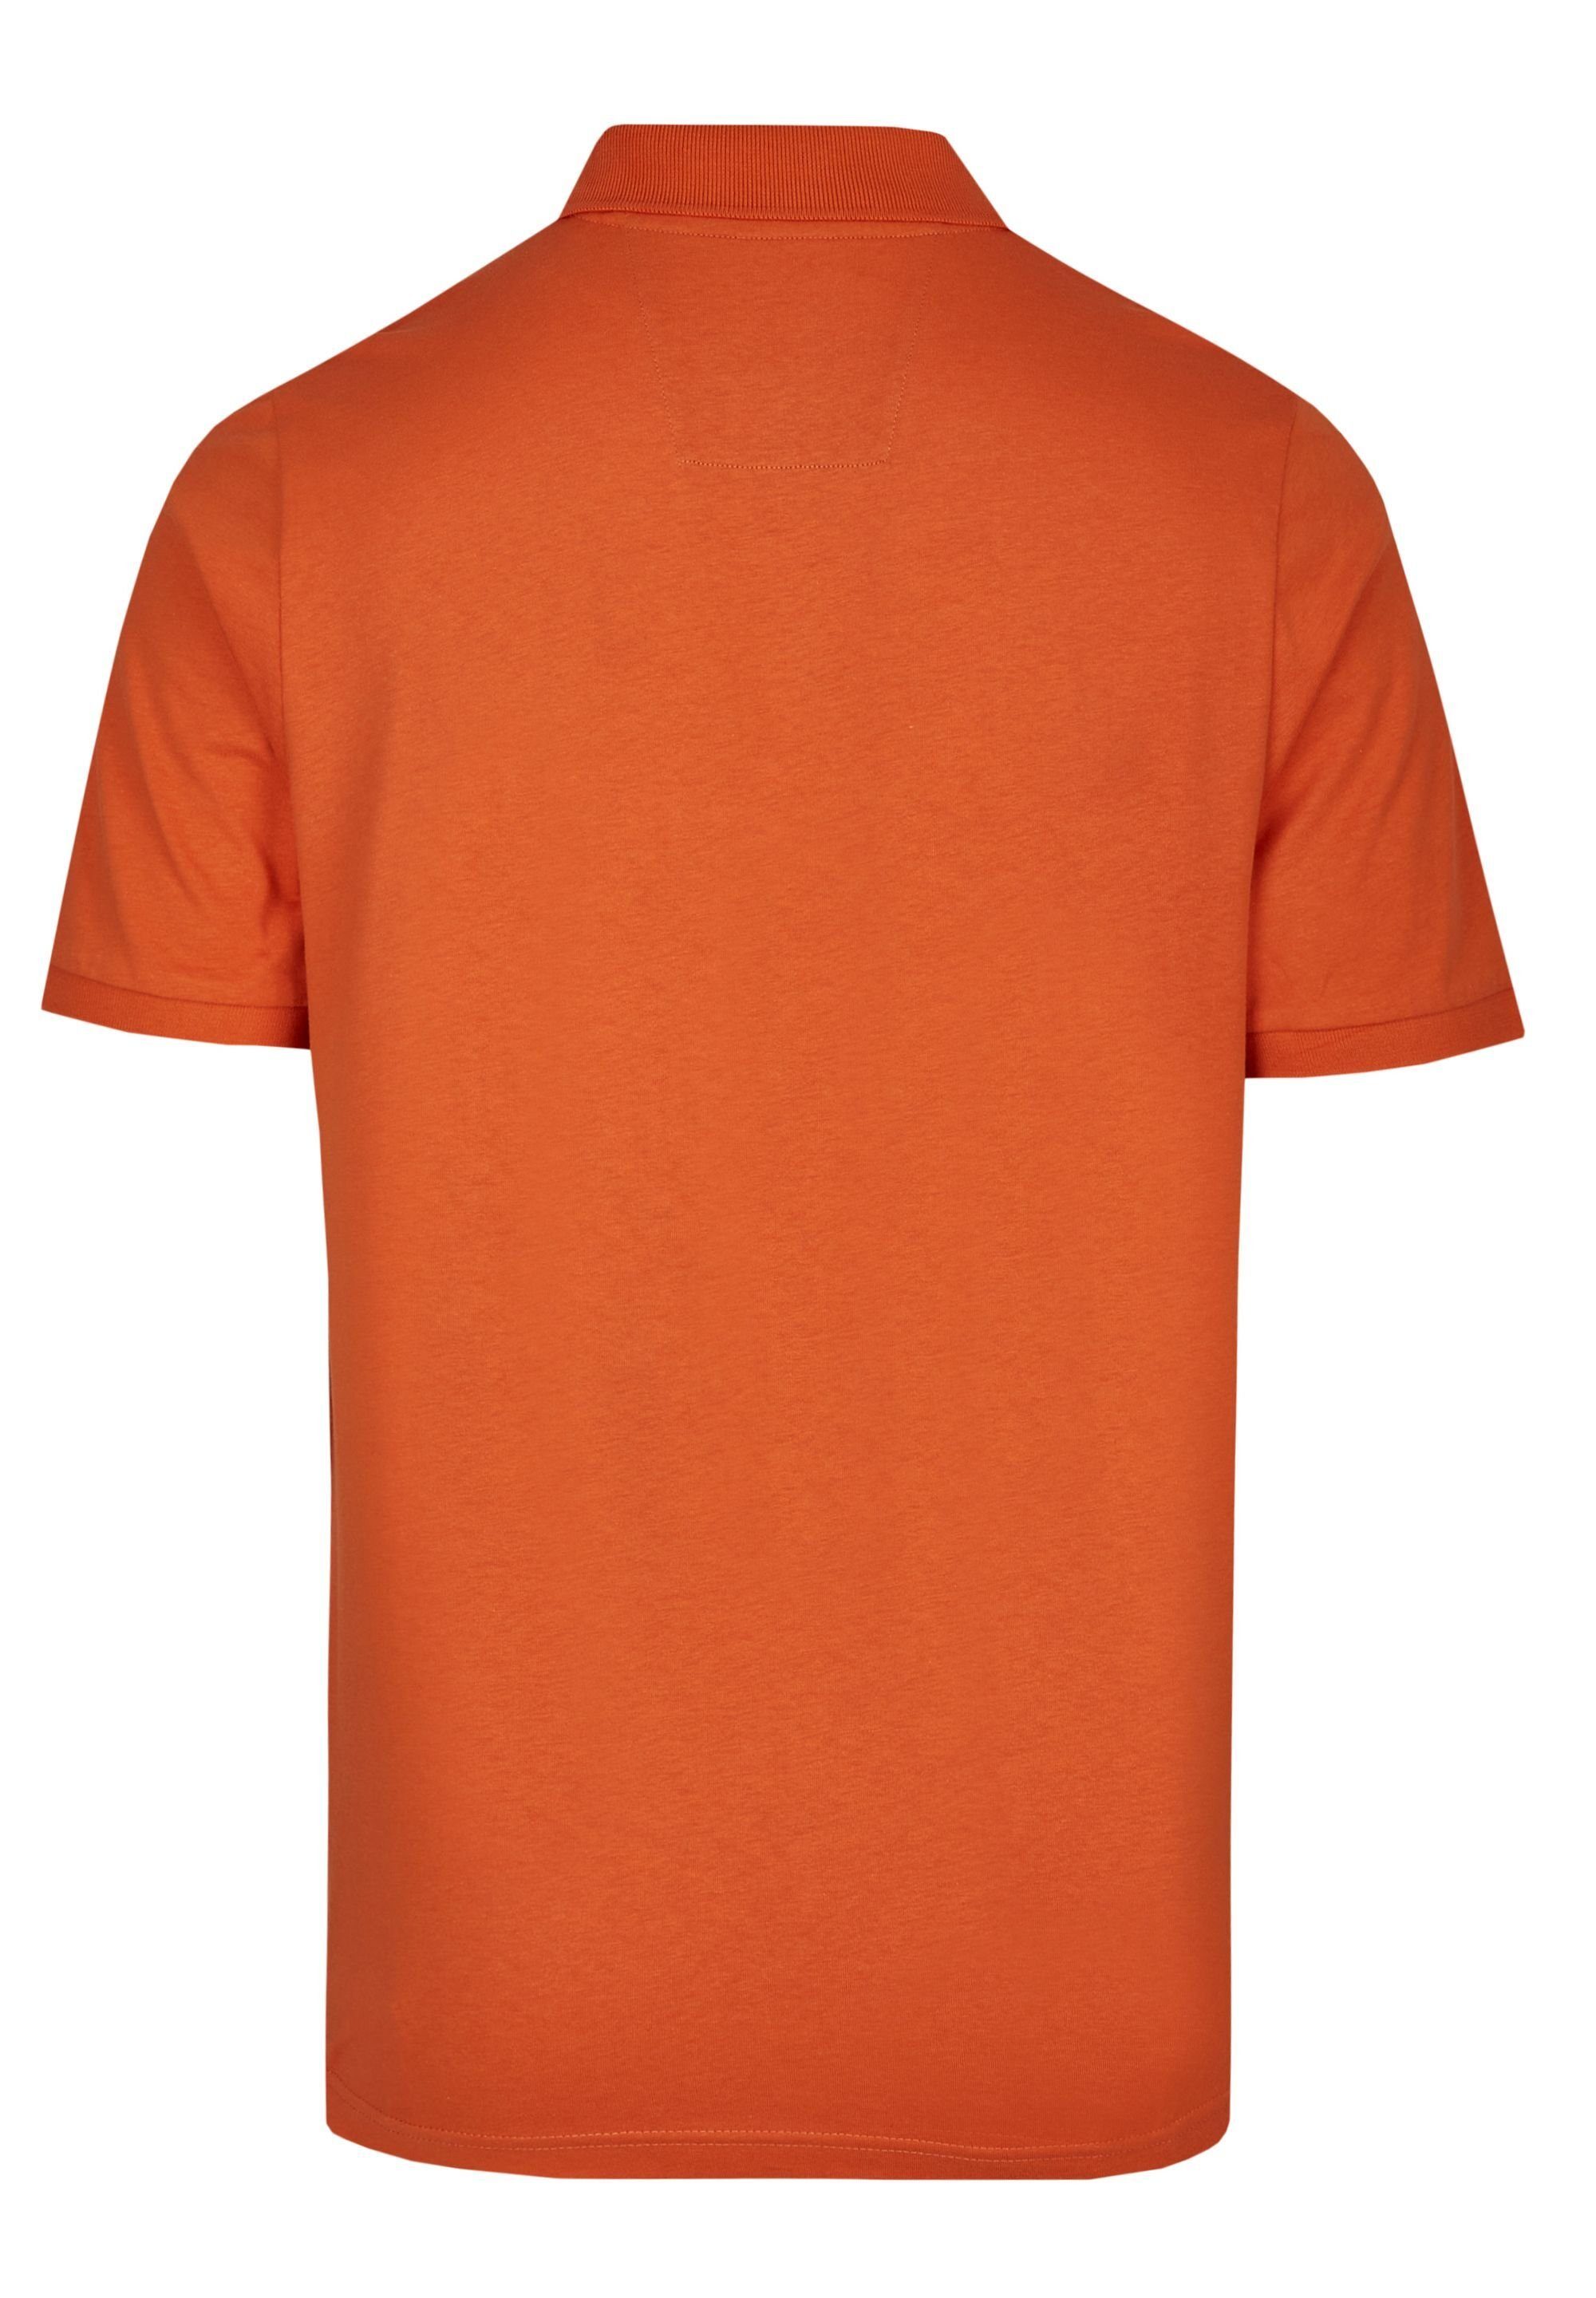 orange im unifarbenem Design PARIS HECHTER Poloshirt